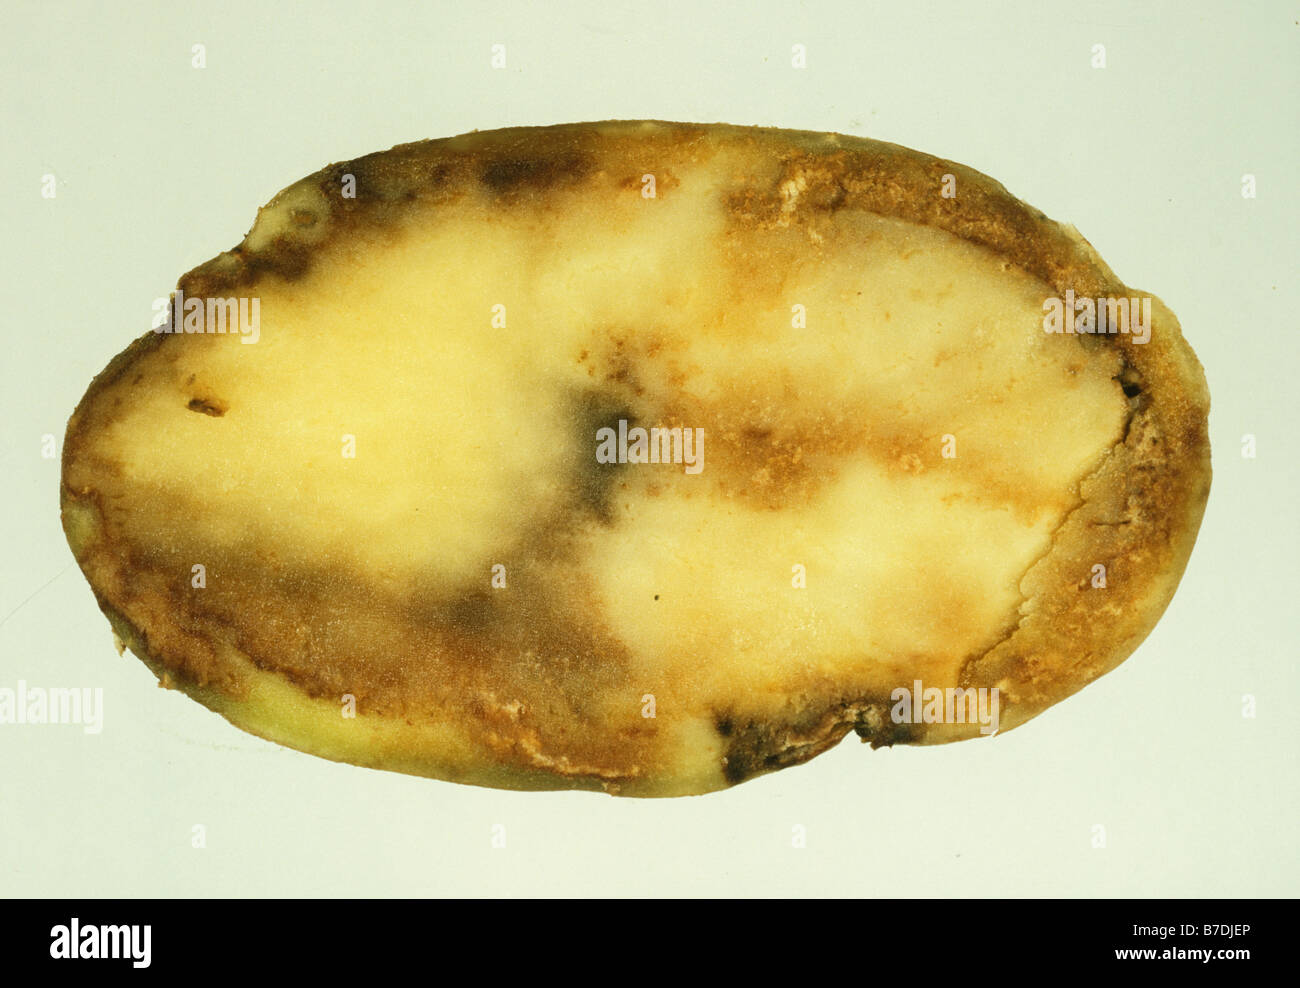 Potato late blight Phytophthora infestans flesh damage in potato section Stock Photo